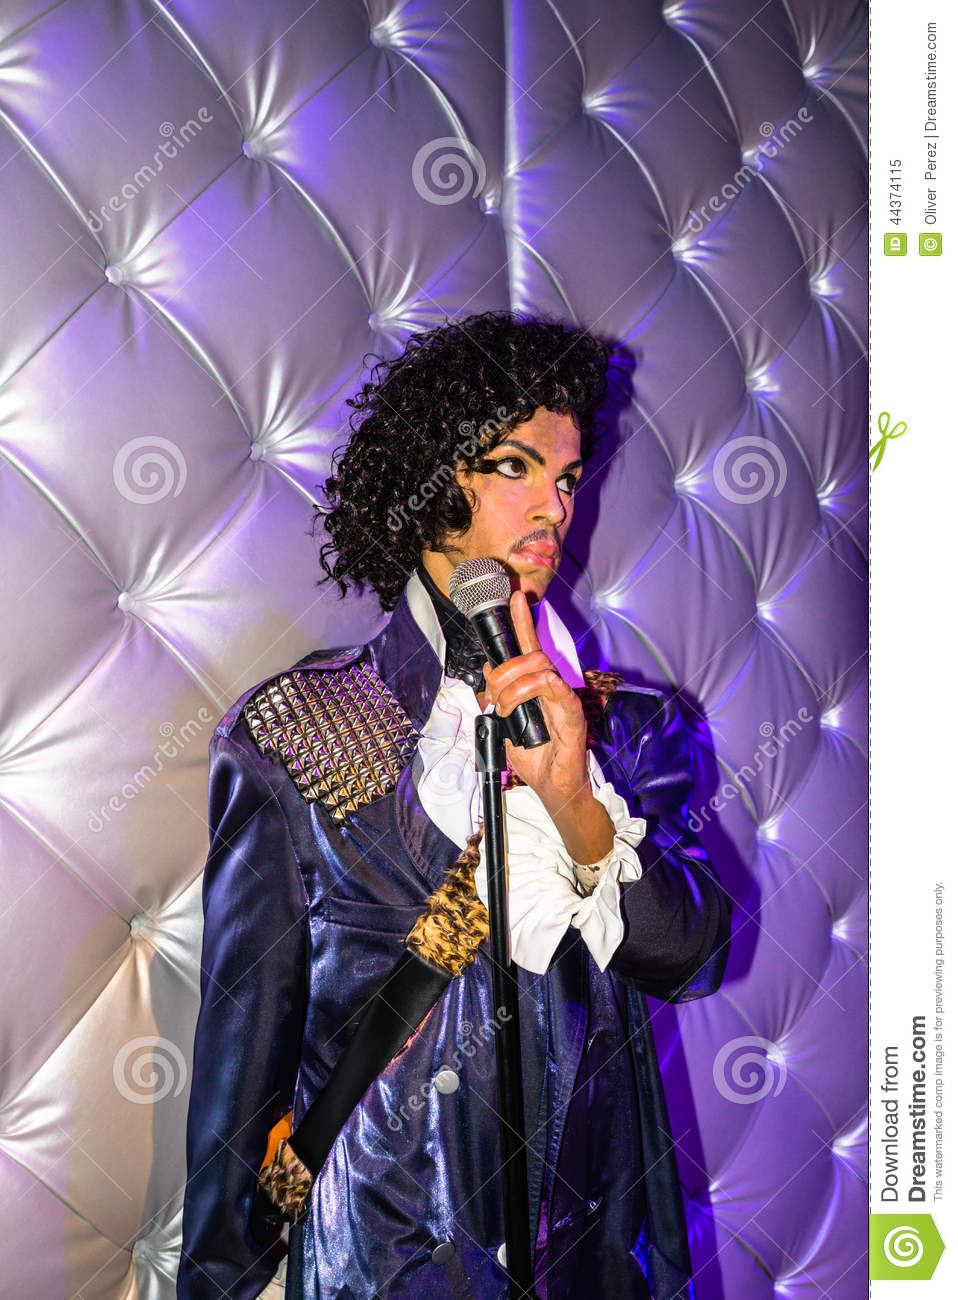 prince-musician-gossip